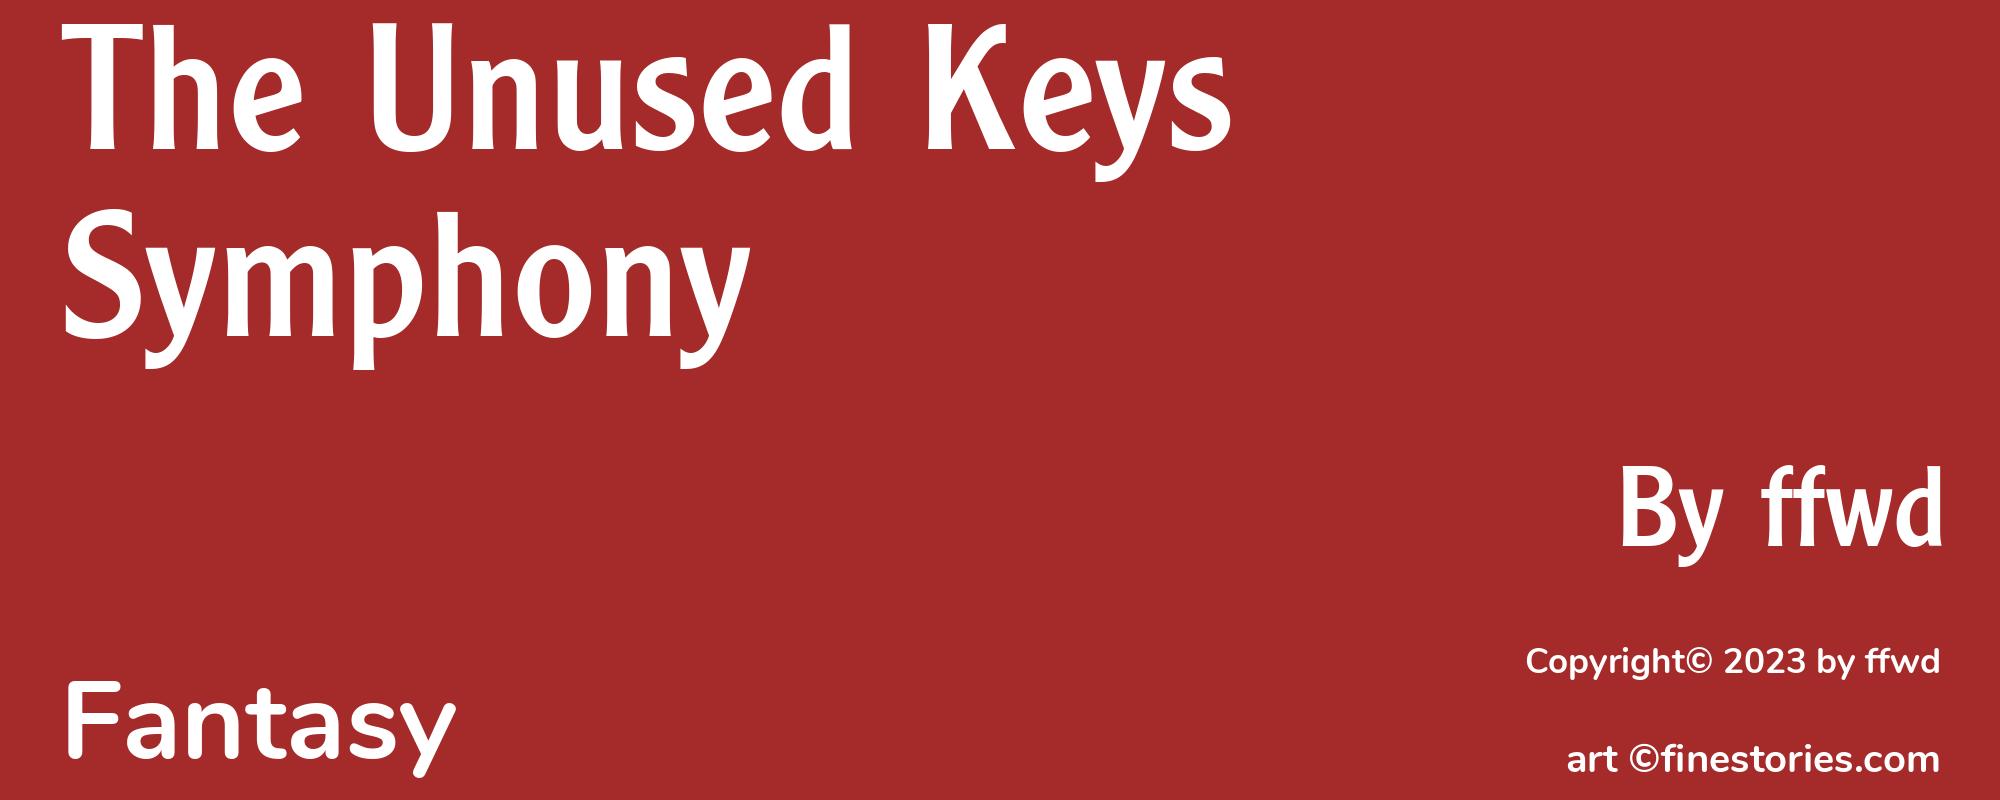 The Unused Keys Symphony - Cover